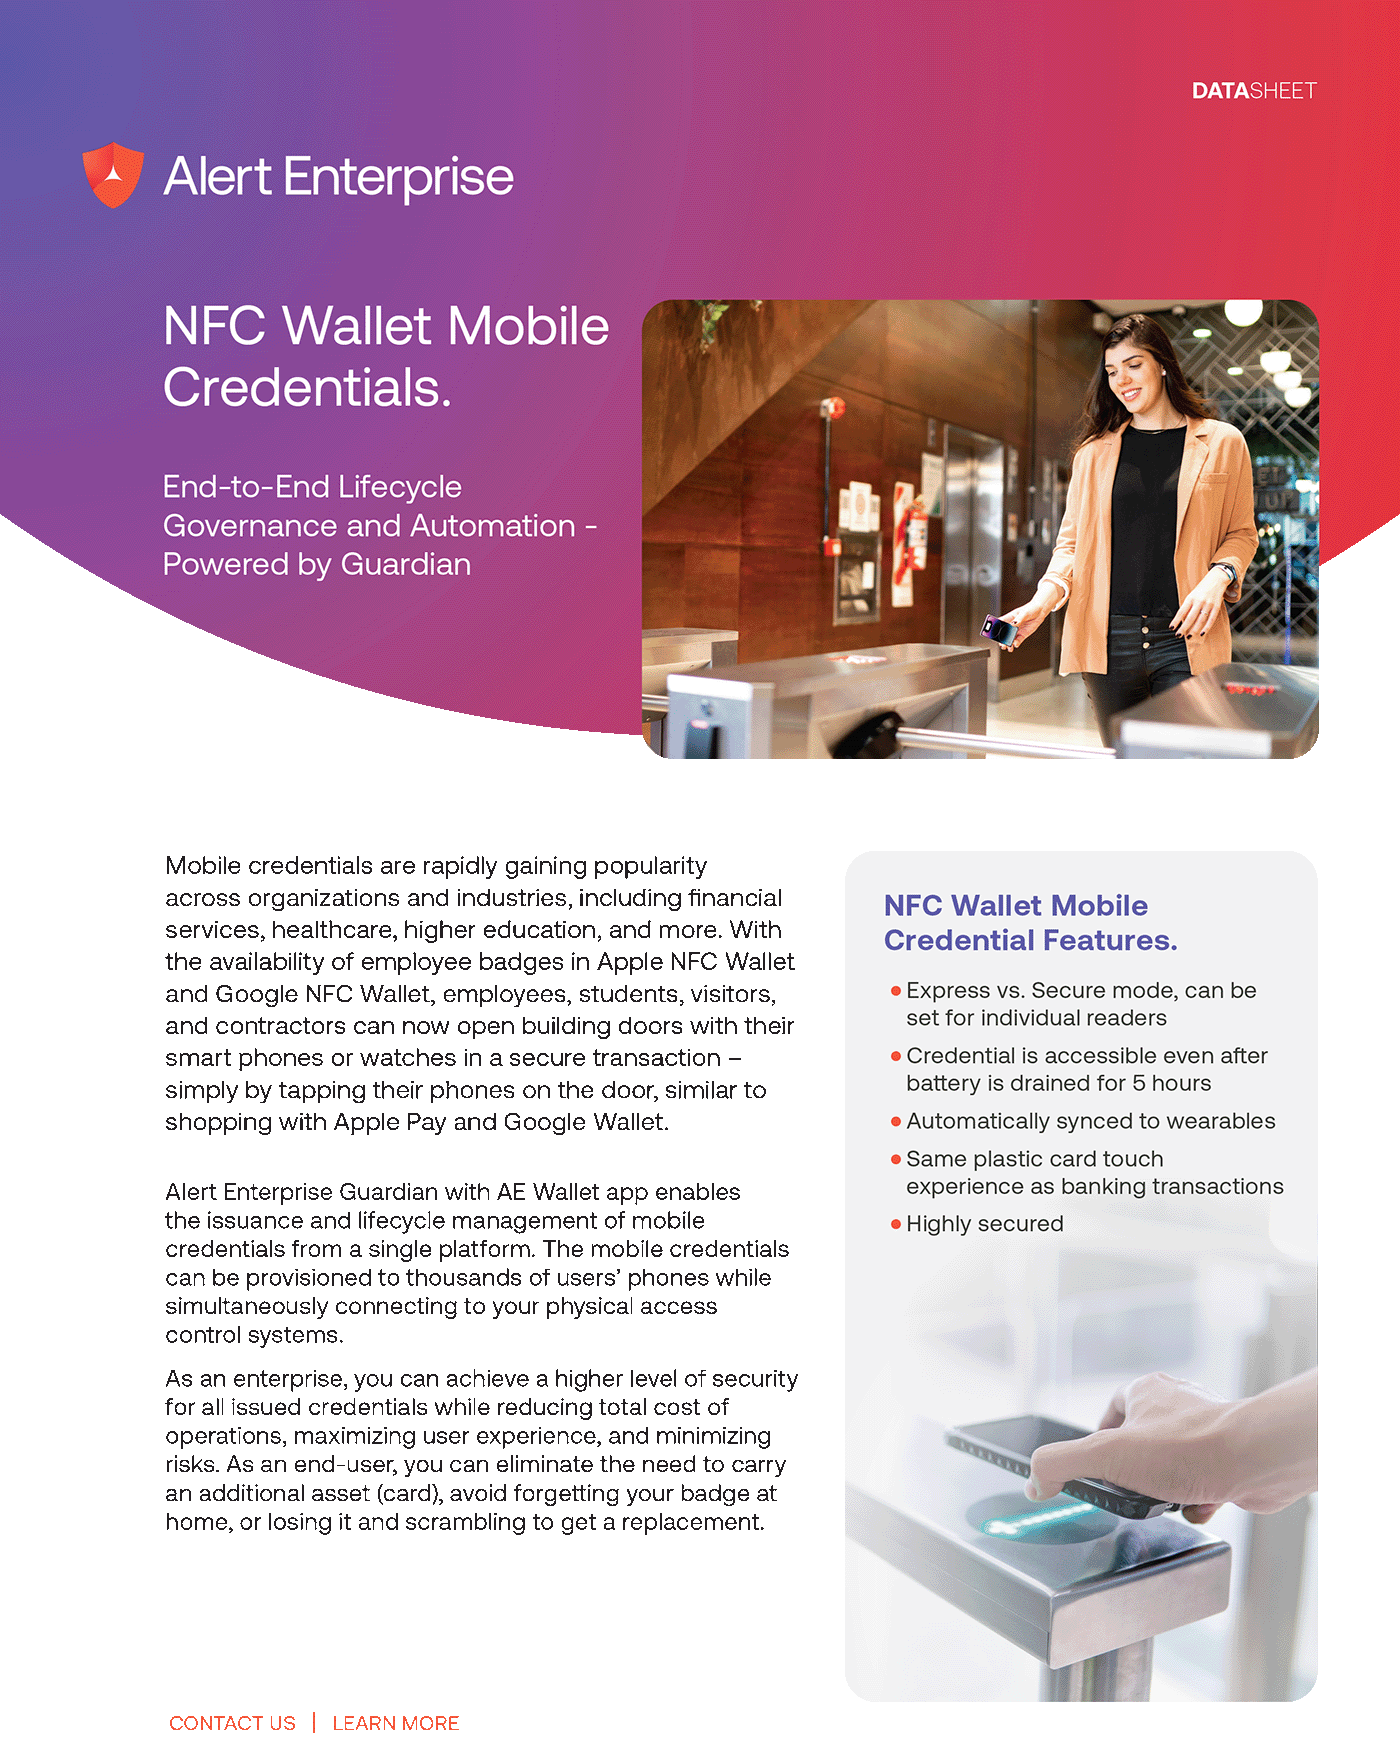 A data sheet giving information regarding NFC Wallet Mobile Credentials.